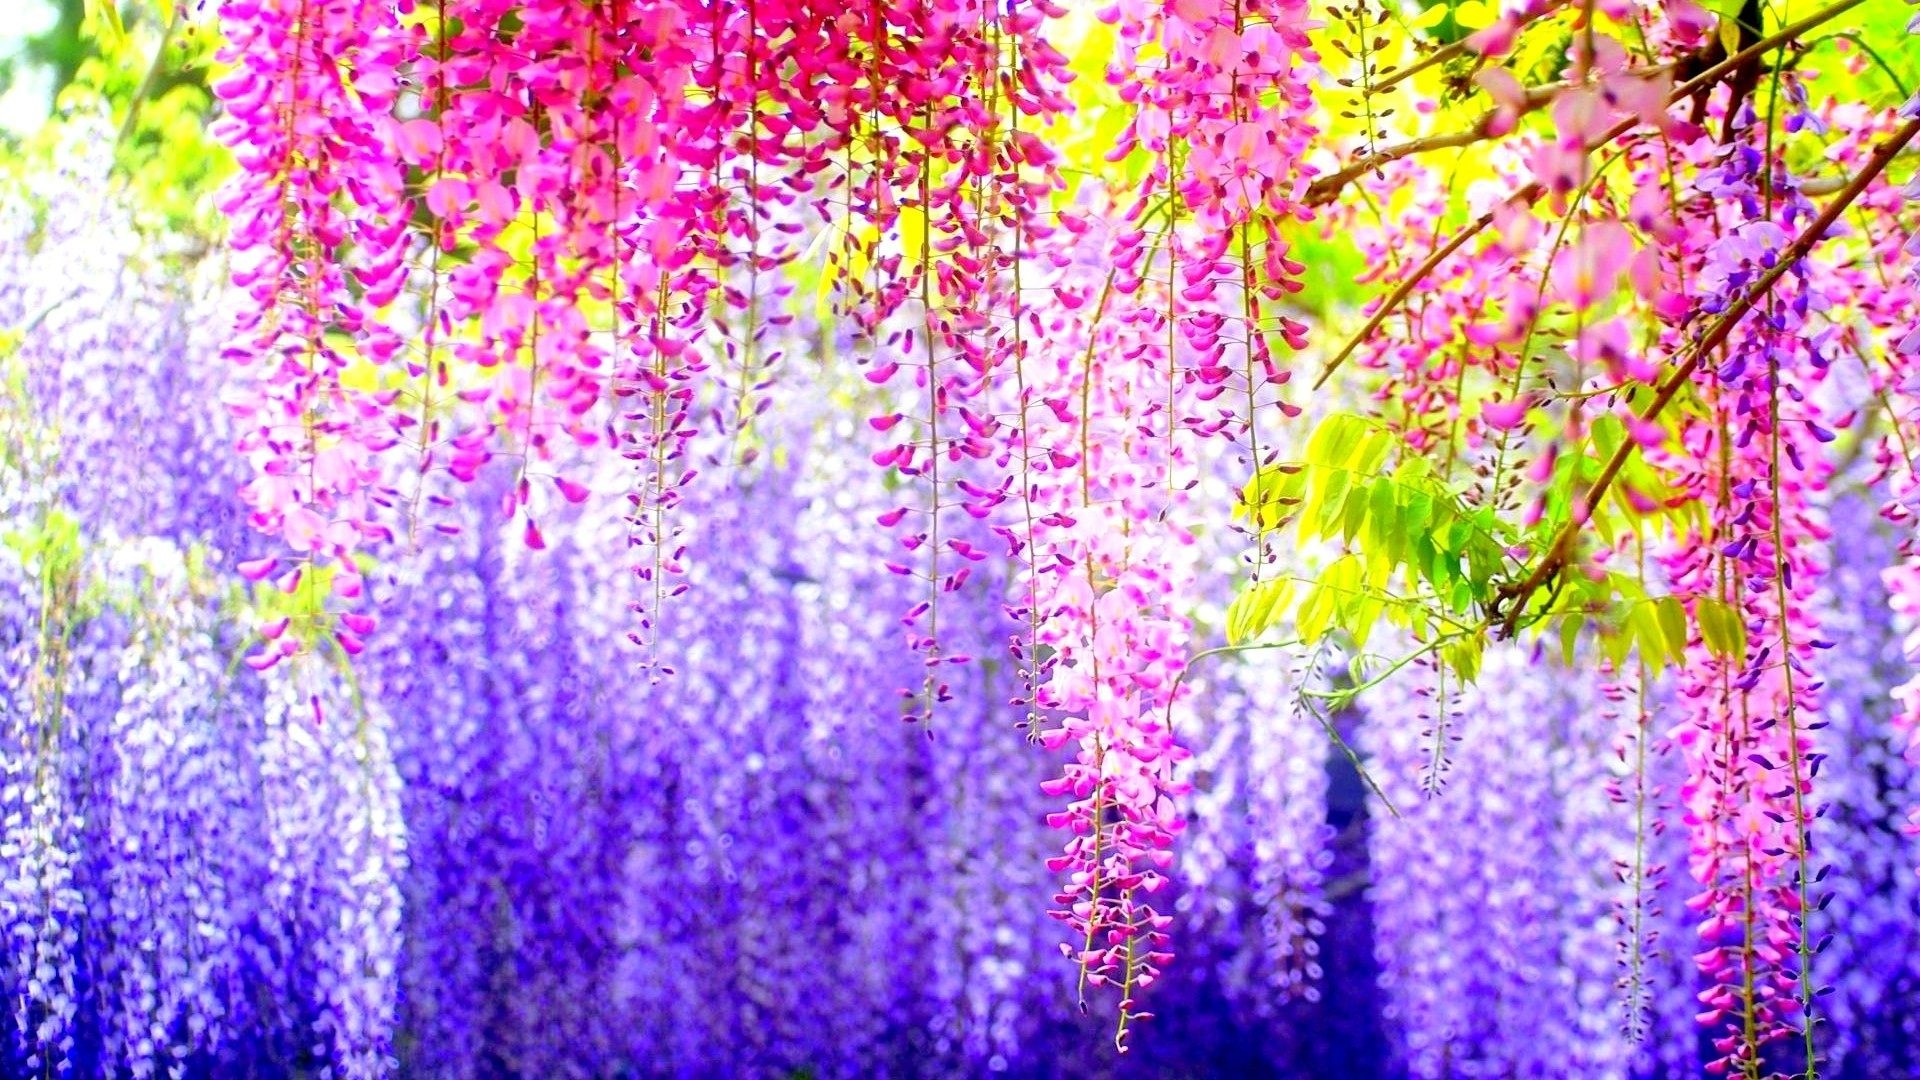 beautiful colorful flowers